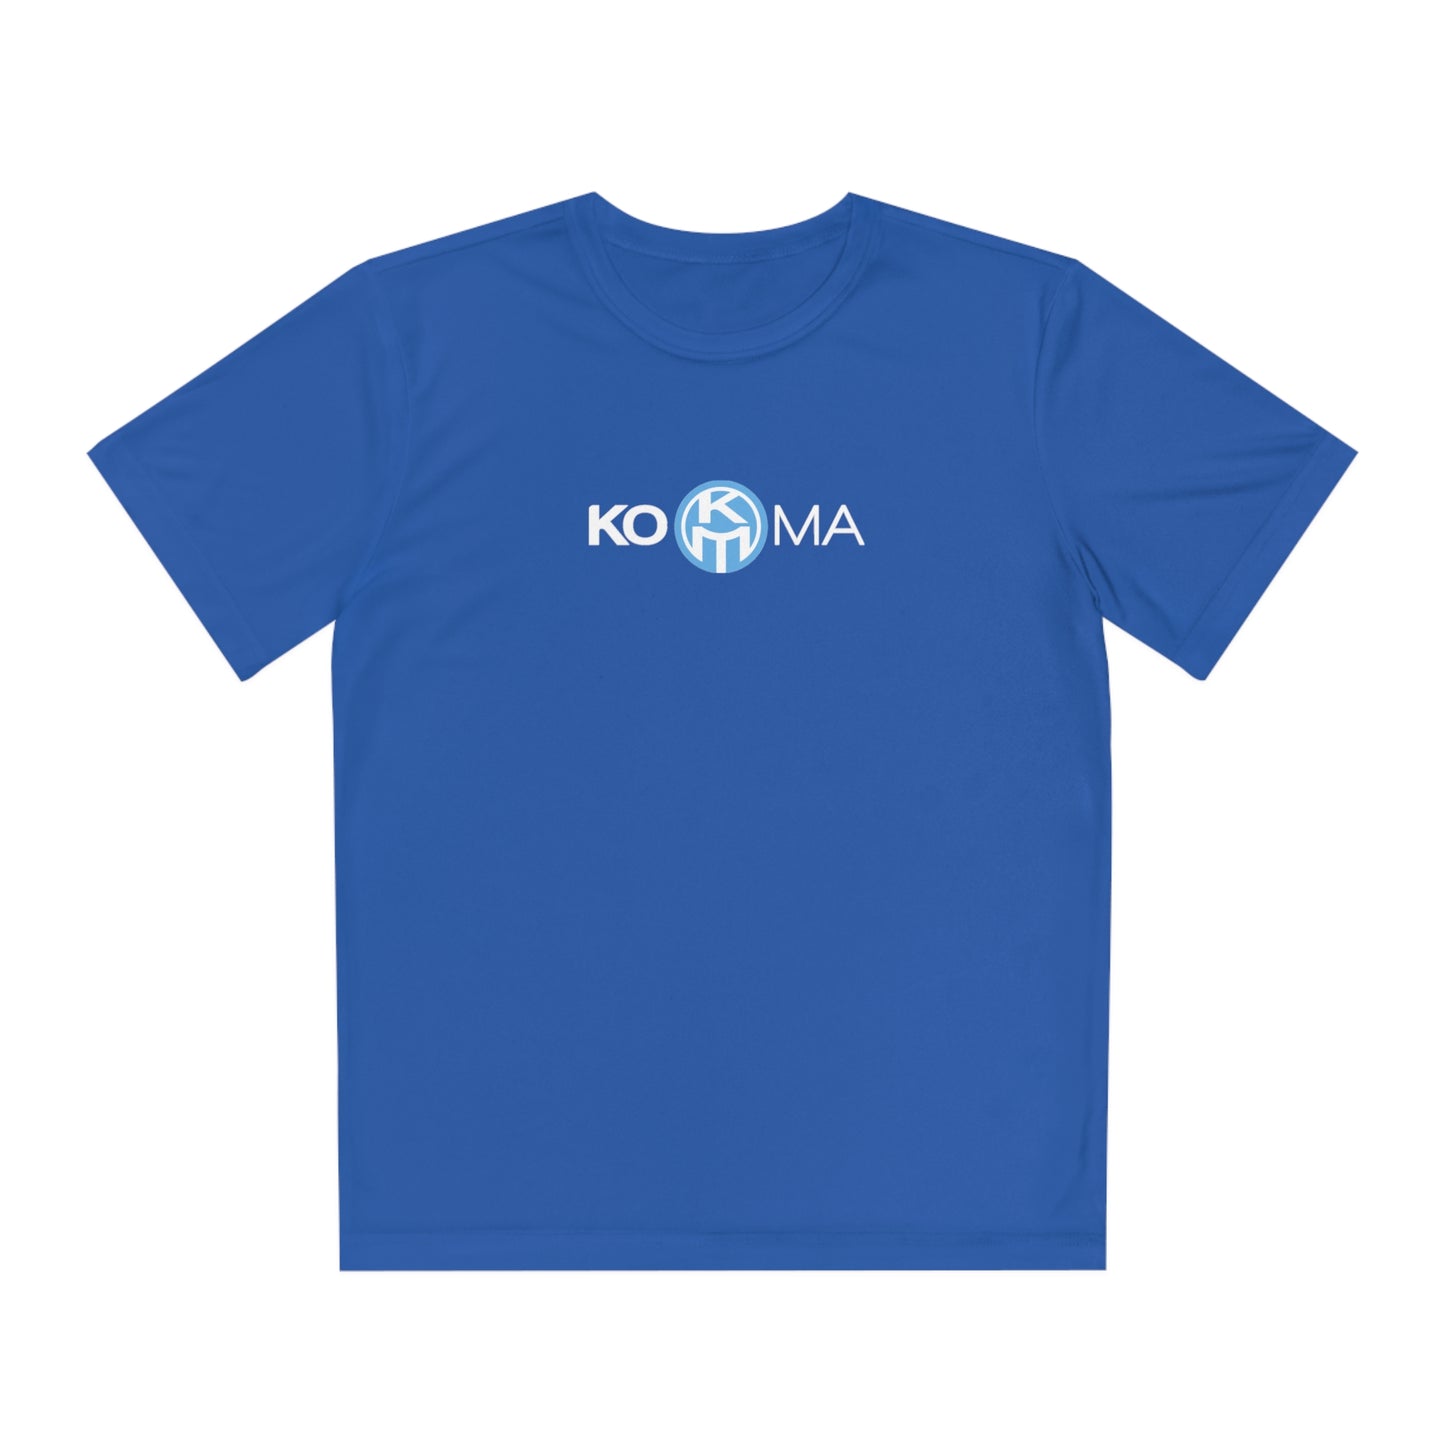 KOMA Uniforms | T-Shirt Only